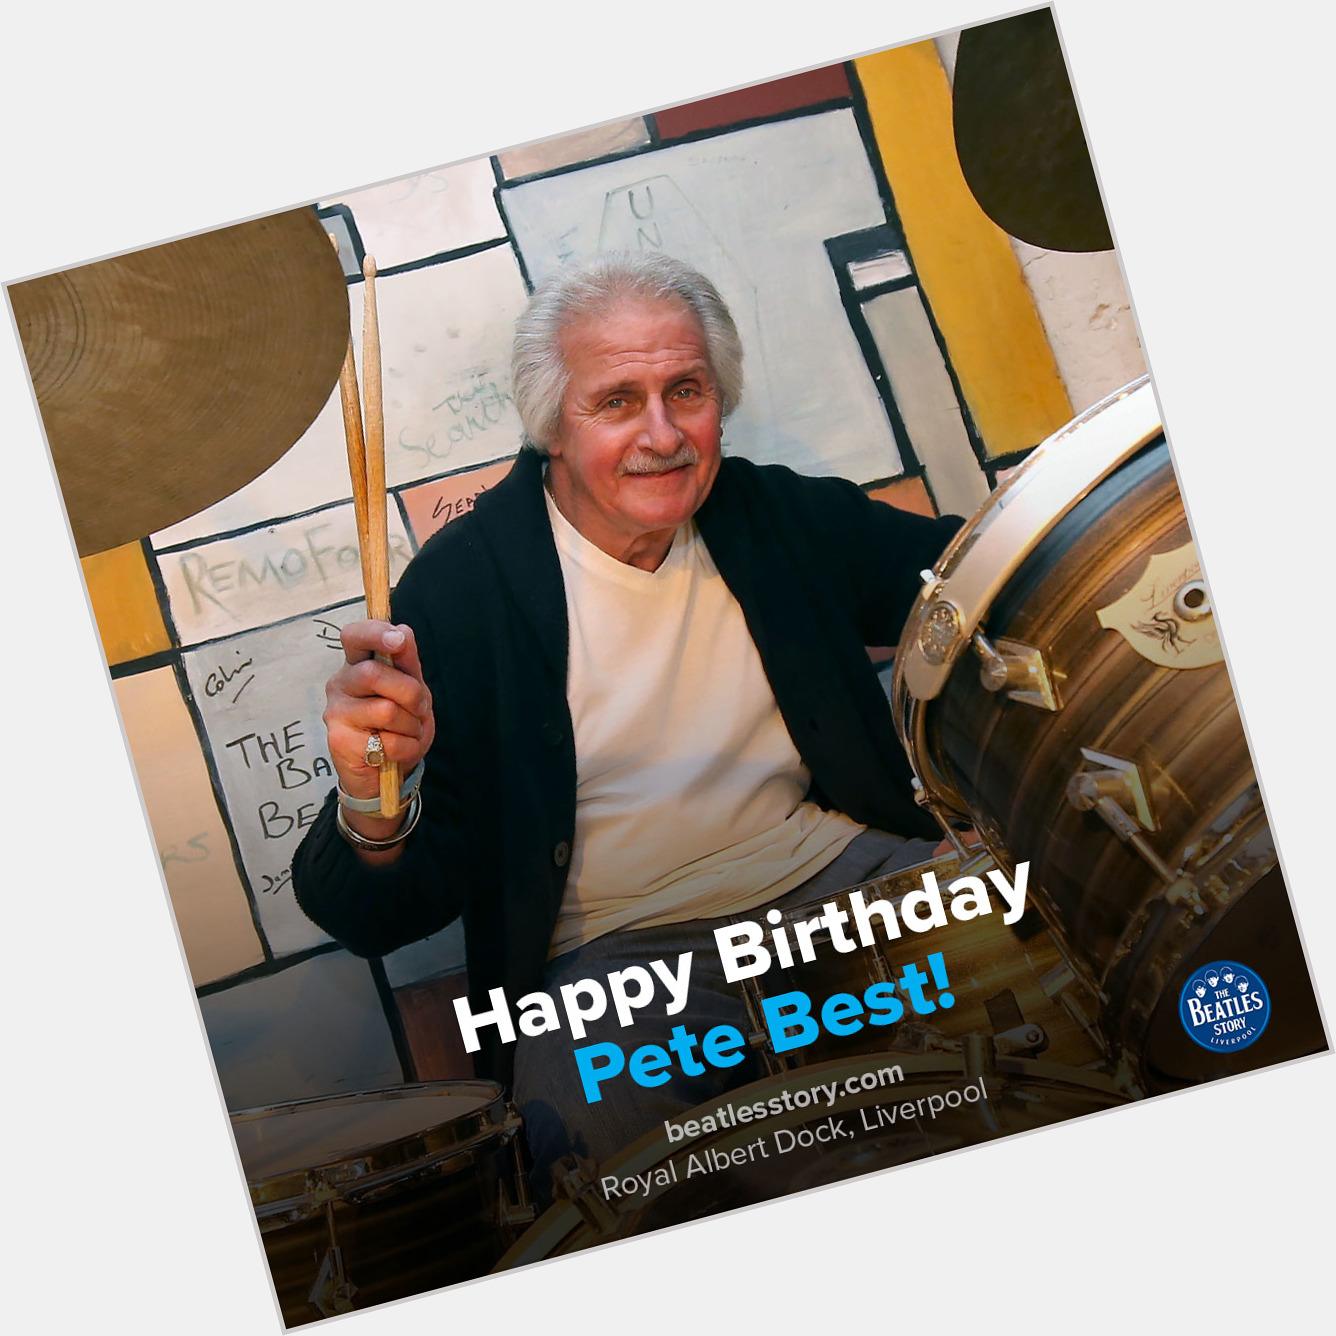 The Beatles original drummer, Pete Best turns 81 today. Happy Birthday, Pete! 